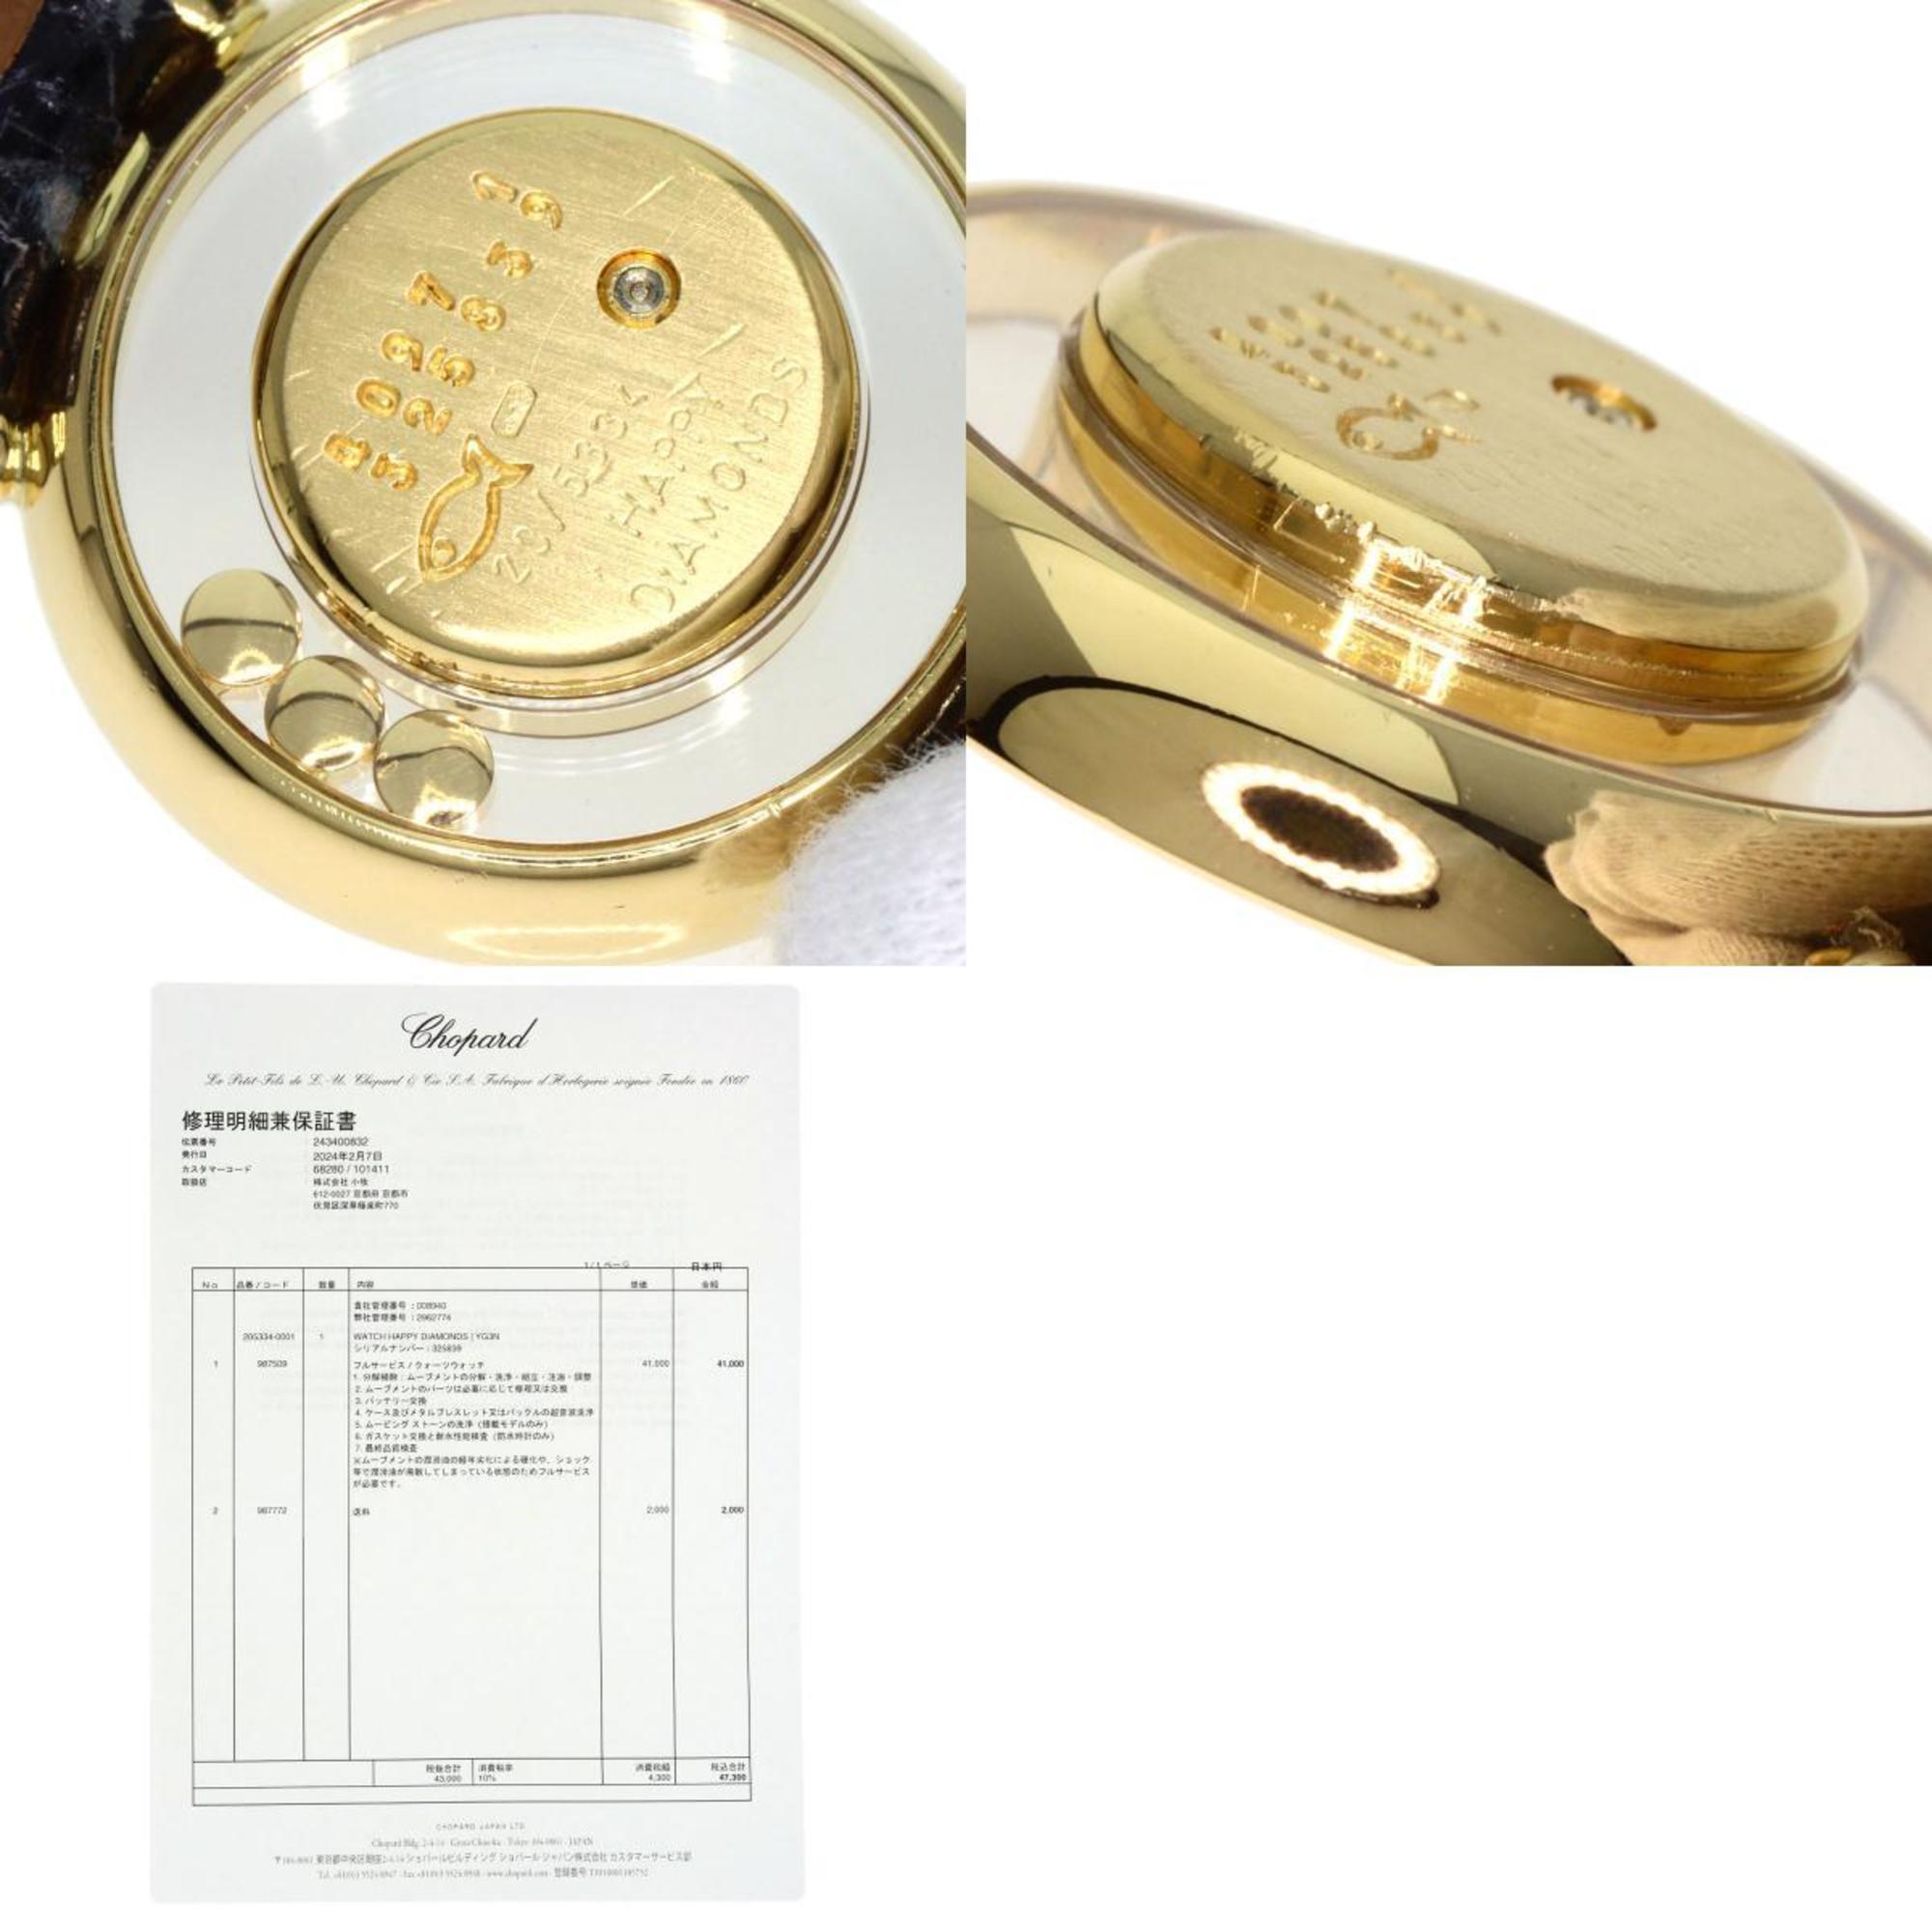 Chopard 20 5334 Happy Diamond Ribbon Watch, 18K Yellow Gold, Leather, Women's